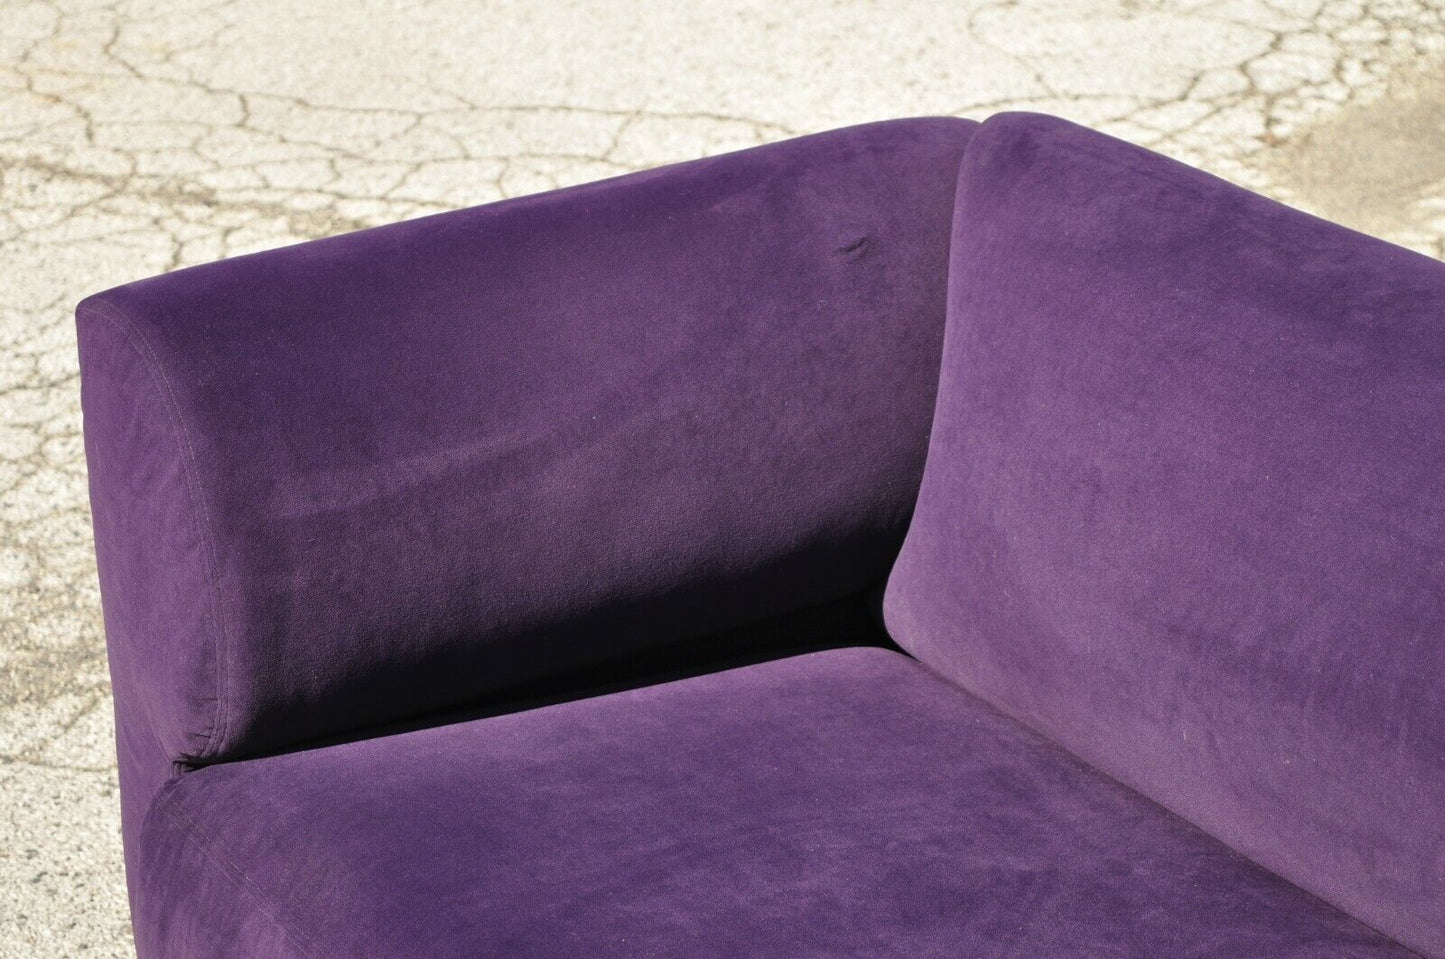 Larry Laslo for Directional Purple Modern Italian Bauhaus Style Chrome Leg Sofa